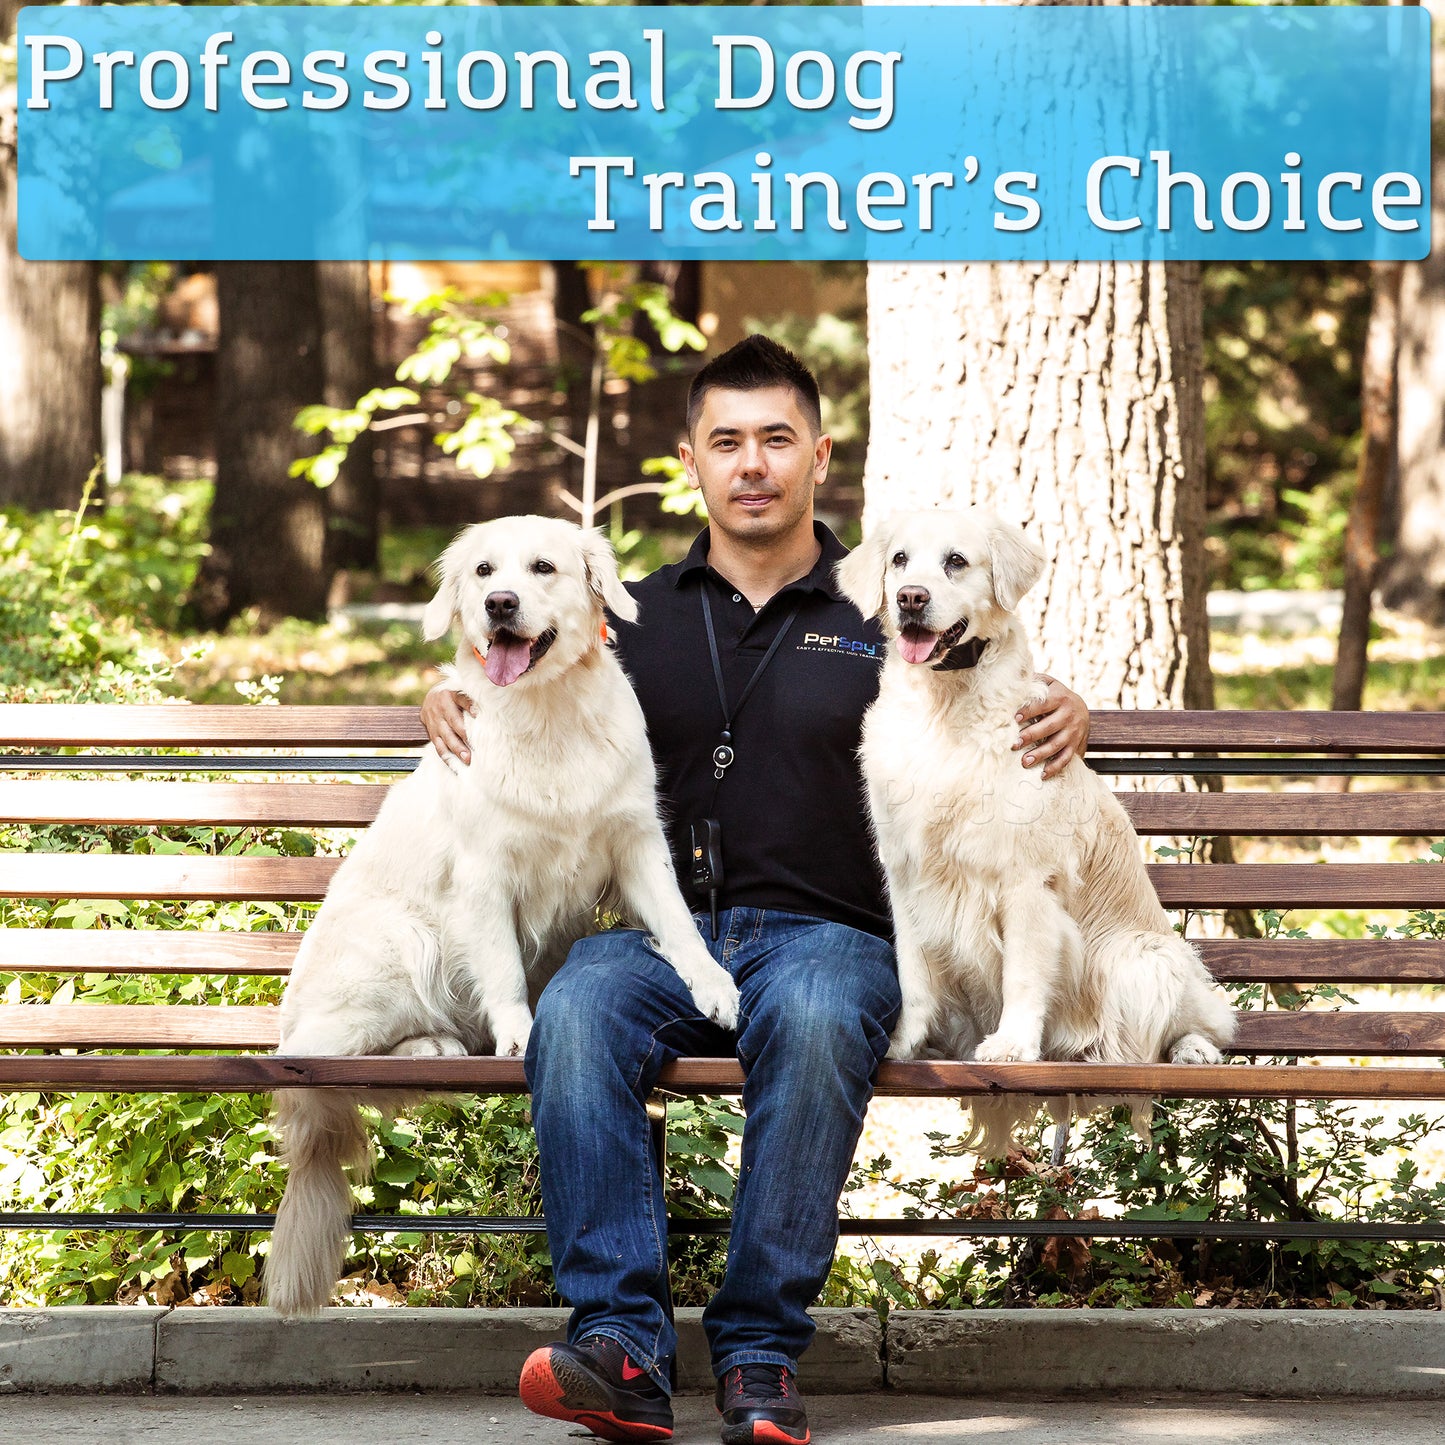 Electric shock bundle - professional dog trainer's choice